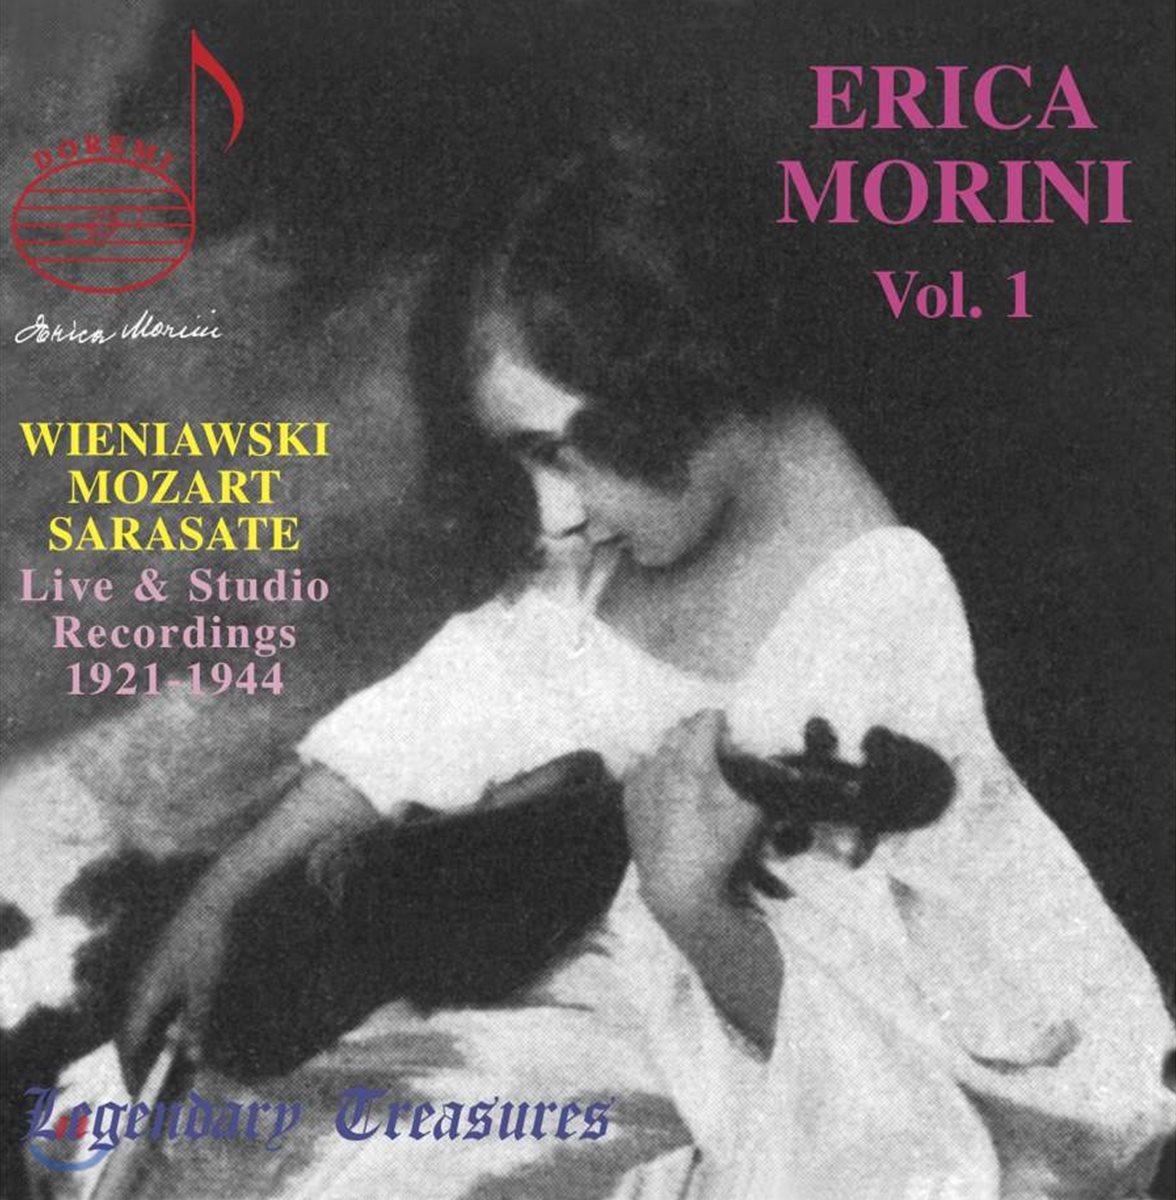 Erica Morini 에리카 모리니 1집 - 비에니아프스키 / 모차르트 / 사라사테 (Erica Morini Vol. 1 - Wieniawski / Mozart / Sarasate)